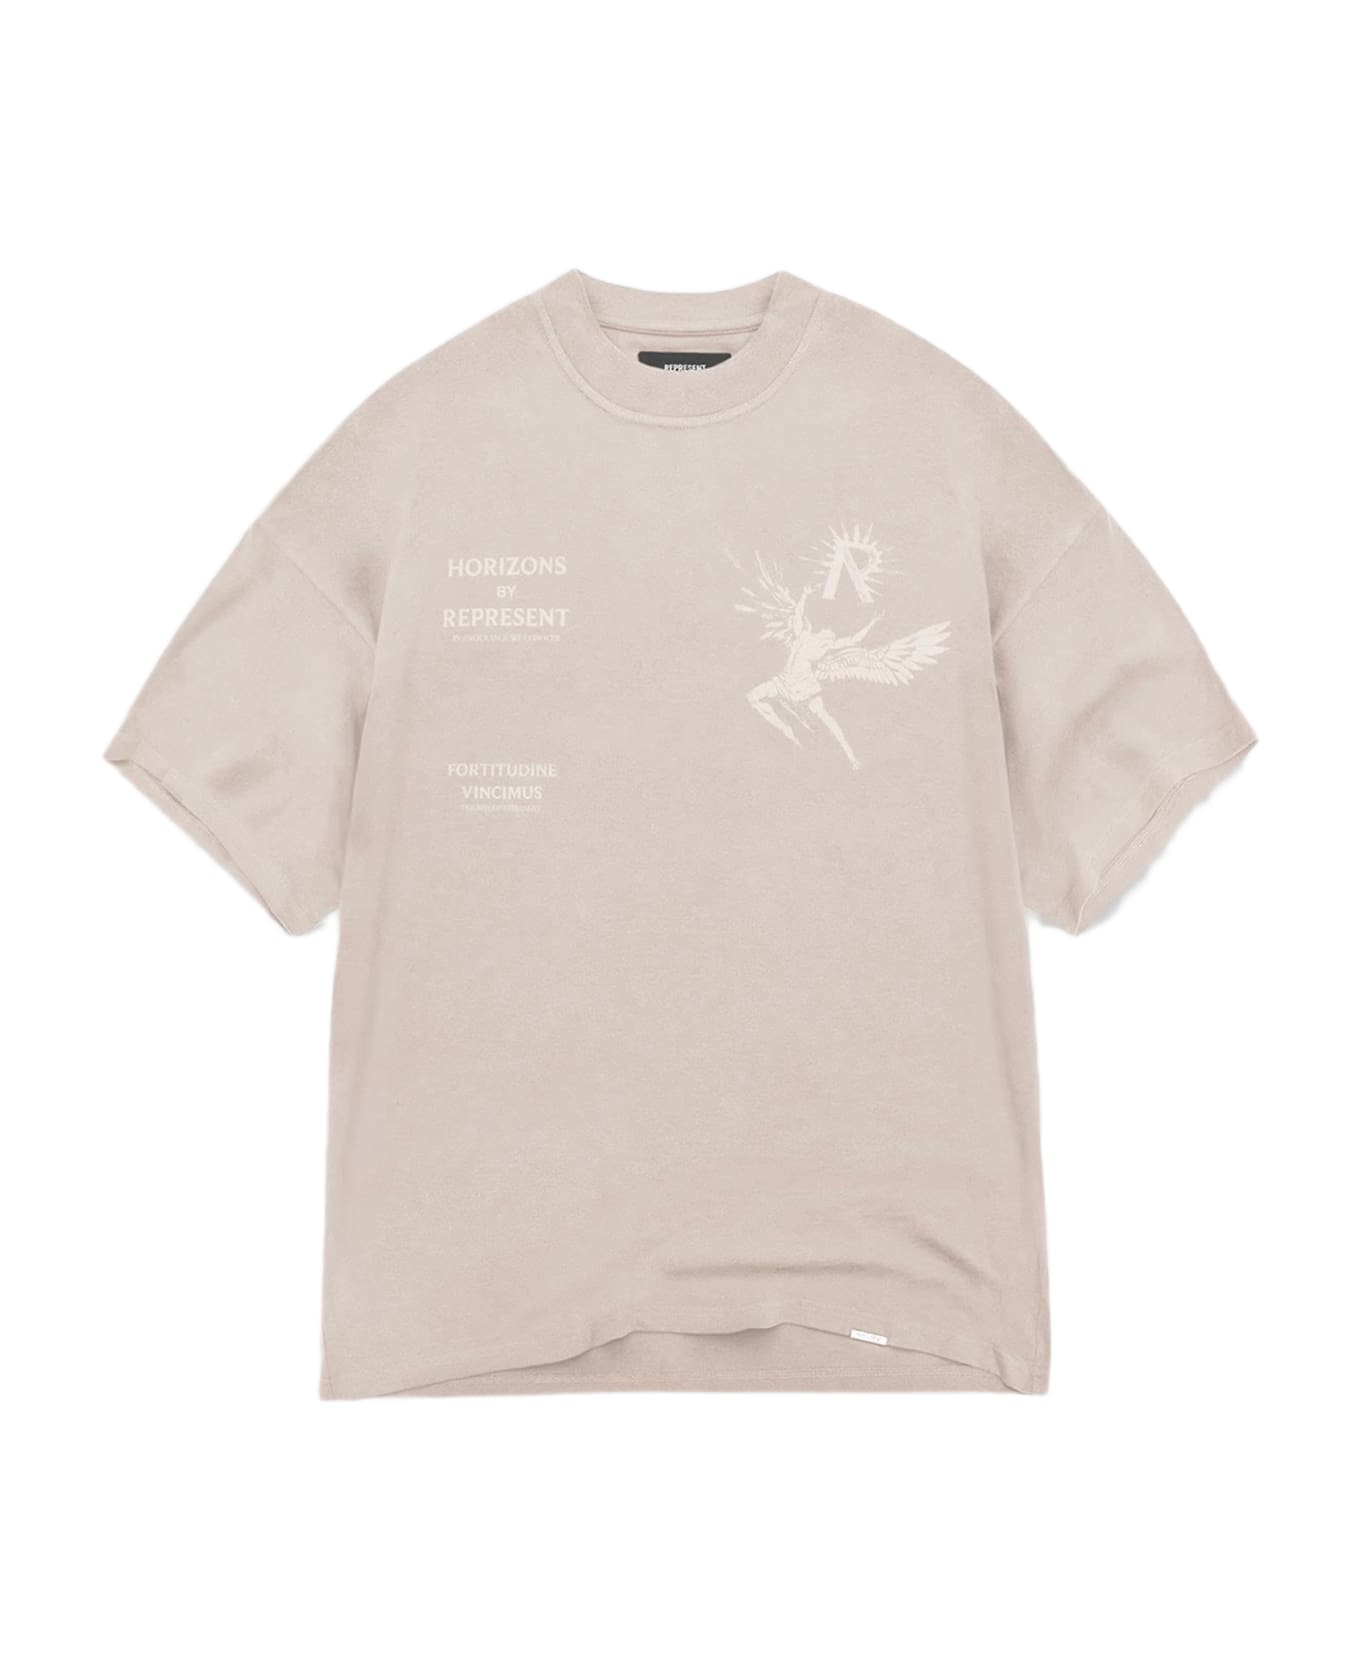 REPRESENT Icarus T-shirt Beige cotton Icarus t-shirt with short sleeves - Icarus T-Shirt - Beige シャツ